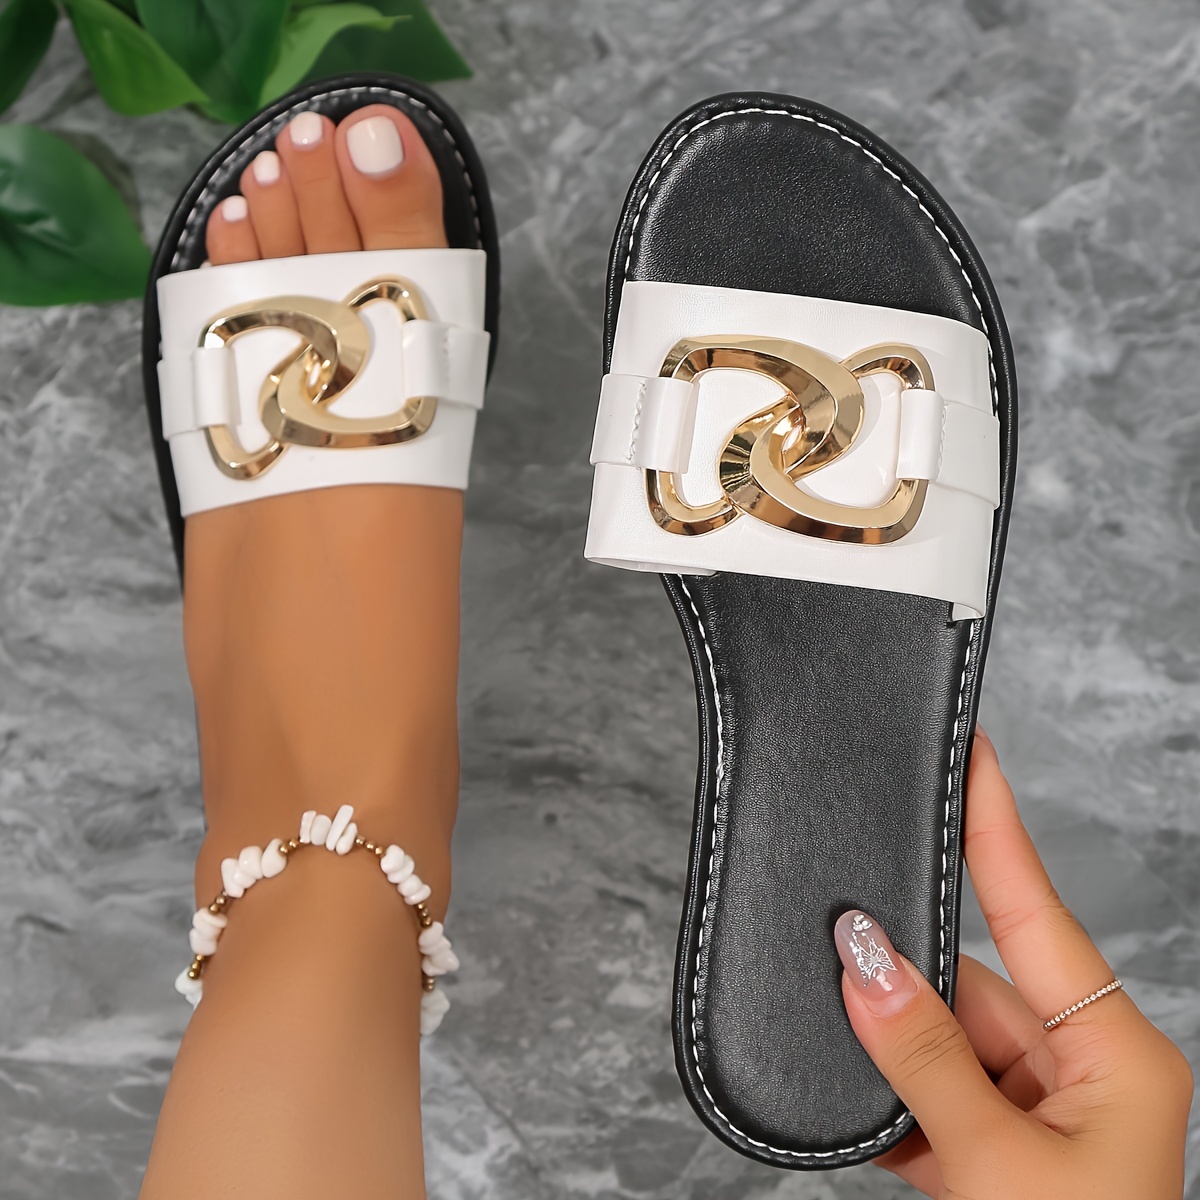 NEW ARRIVAL !! Gucci women flat slippers summer beach slippers